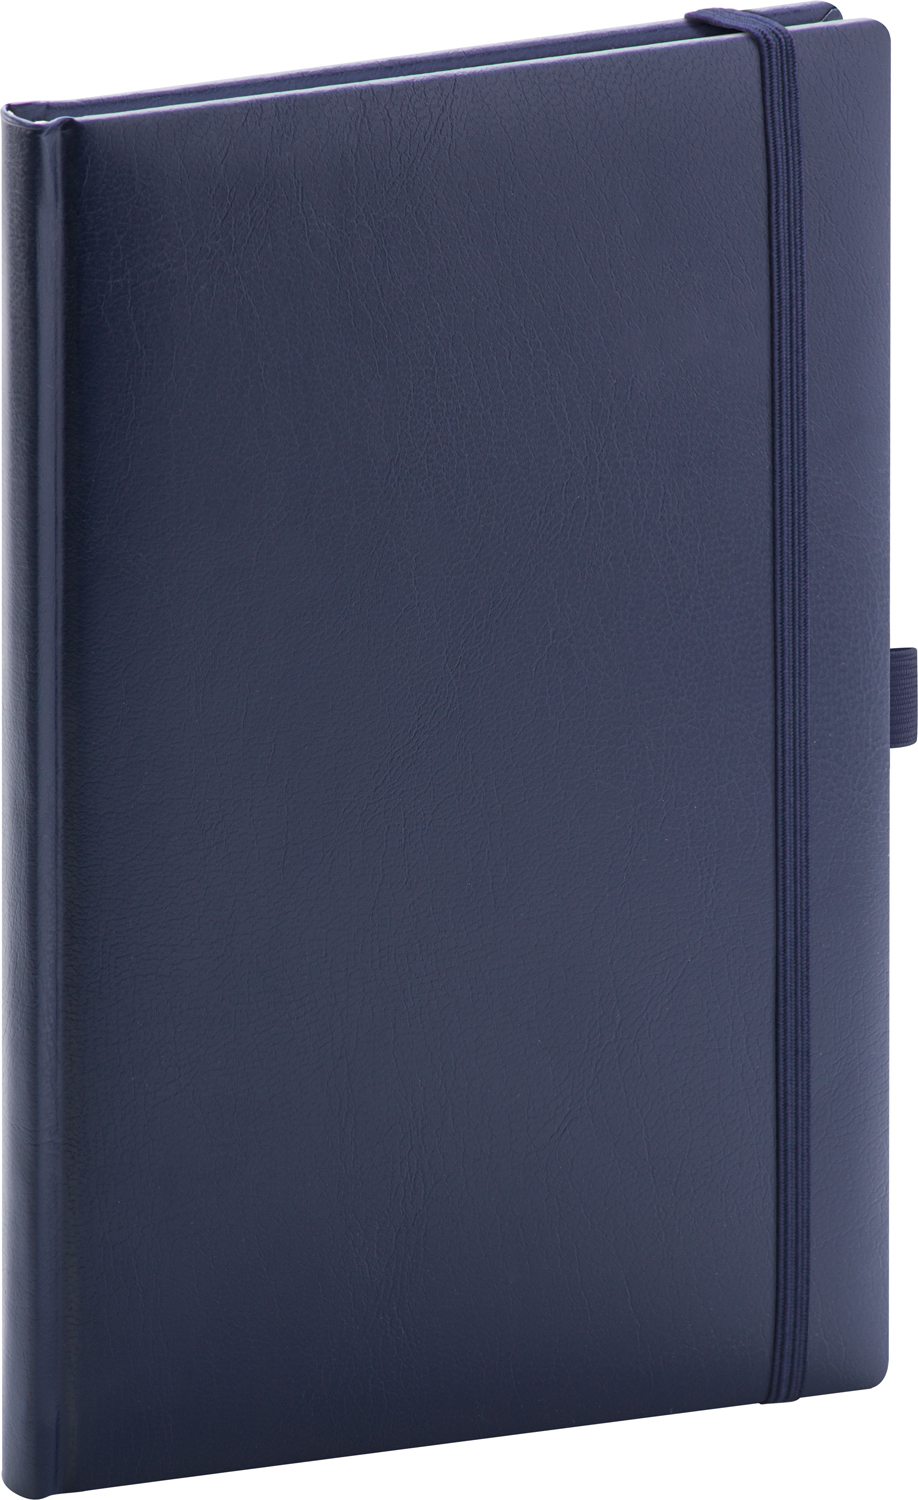 Linkovaný zápisník Balacron, A5 - tmavě modrá